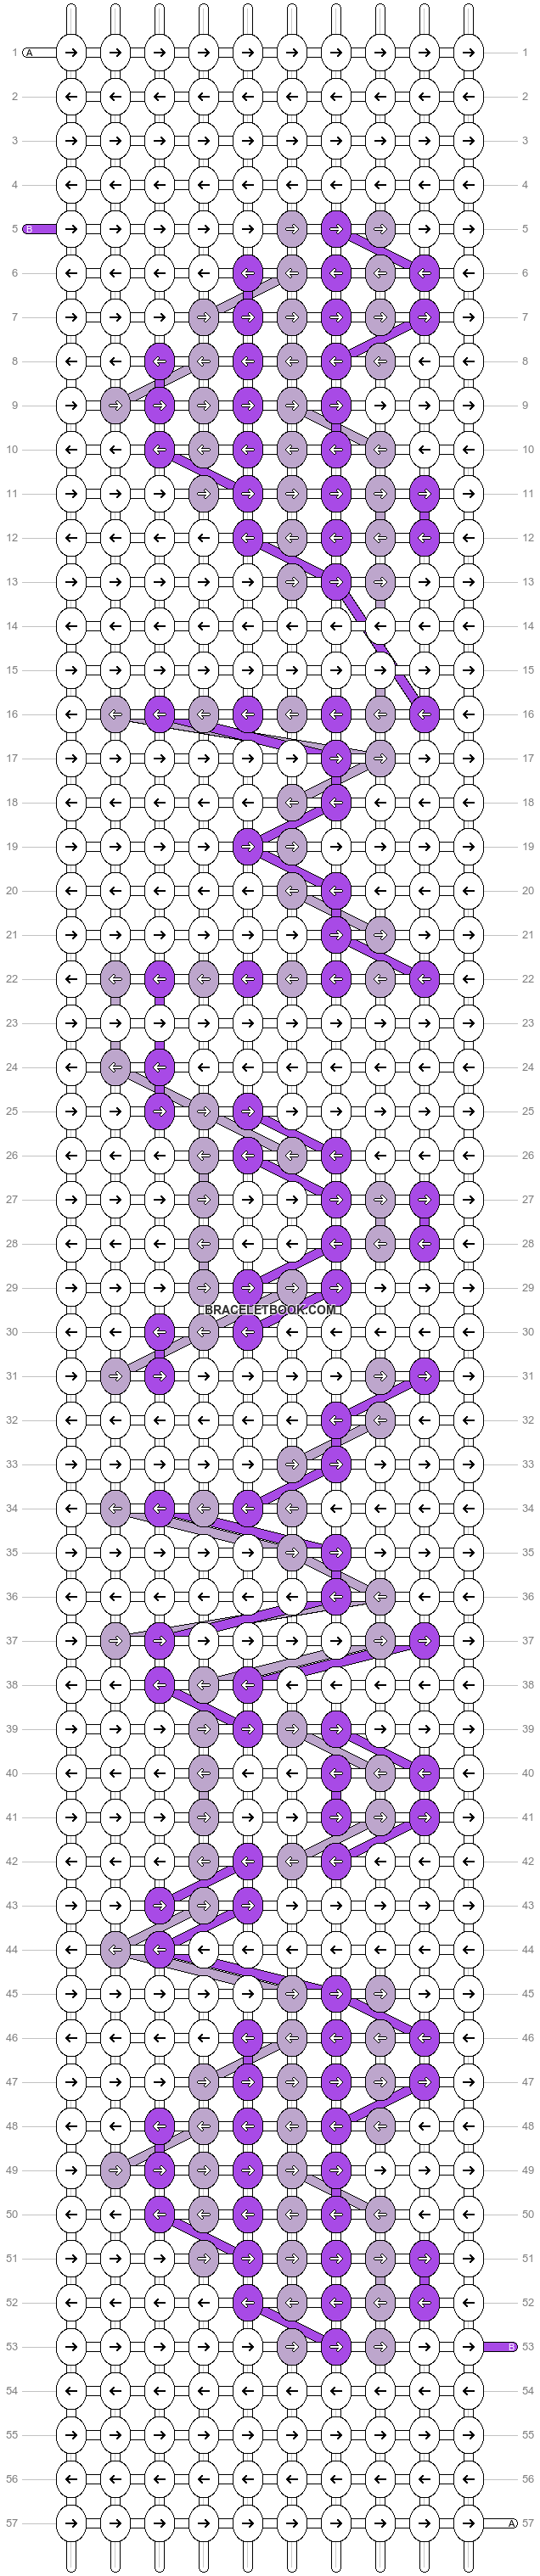 Alpha pattern #5800 variation #42634 pattern